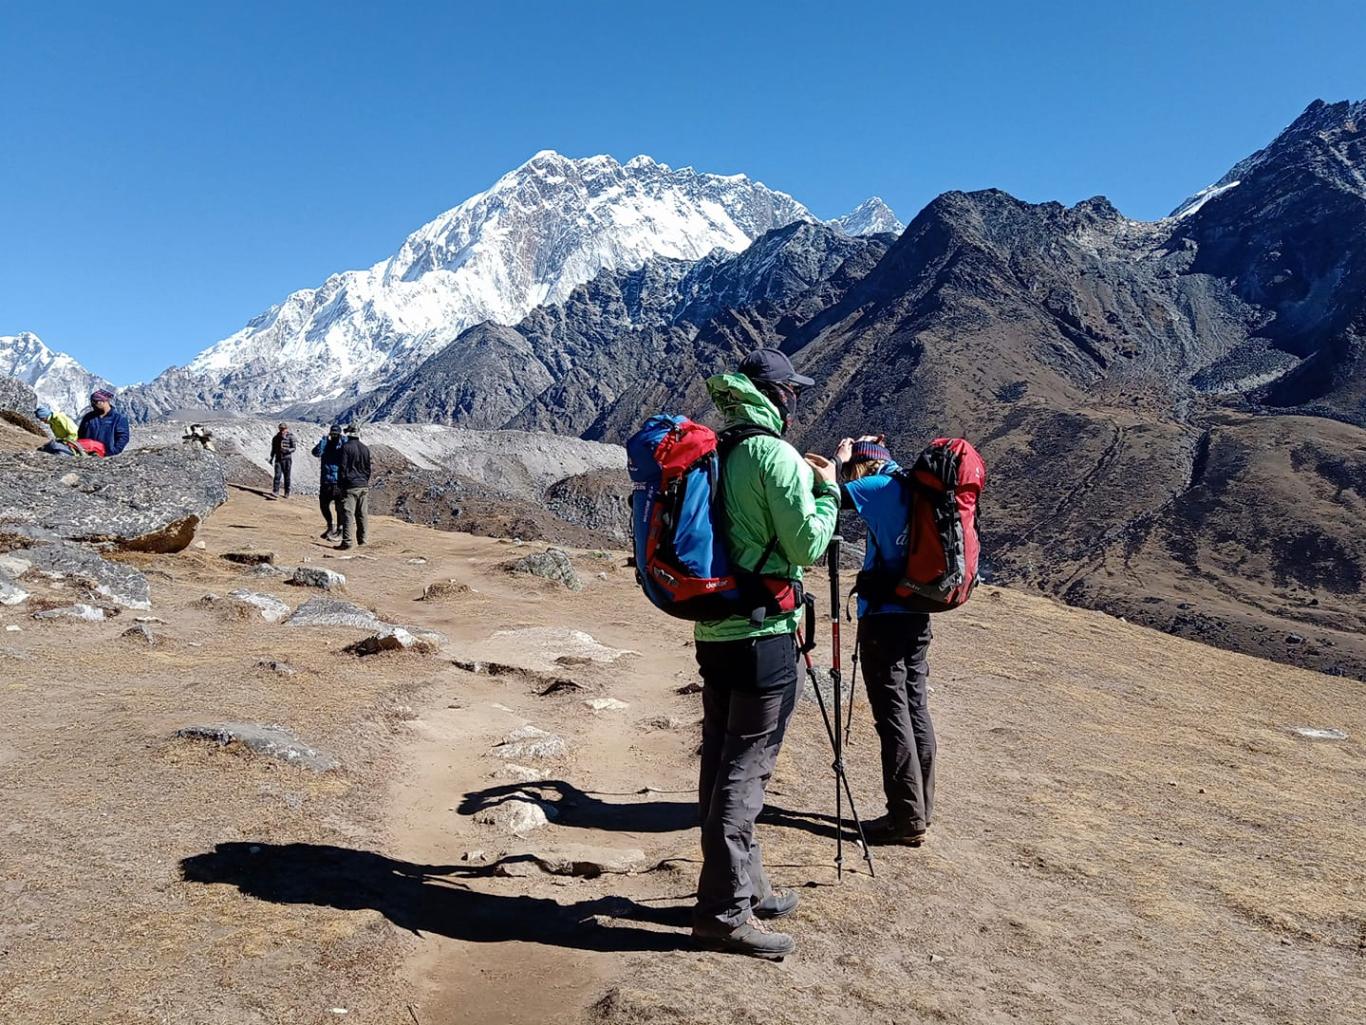 Agence francophone et trekking au Nepal